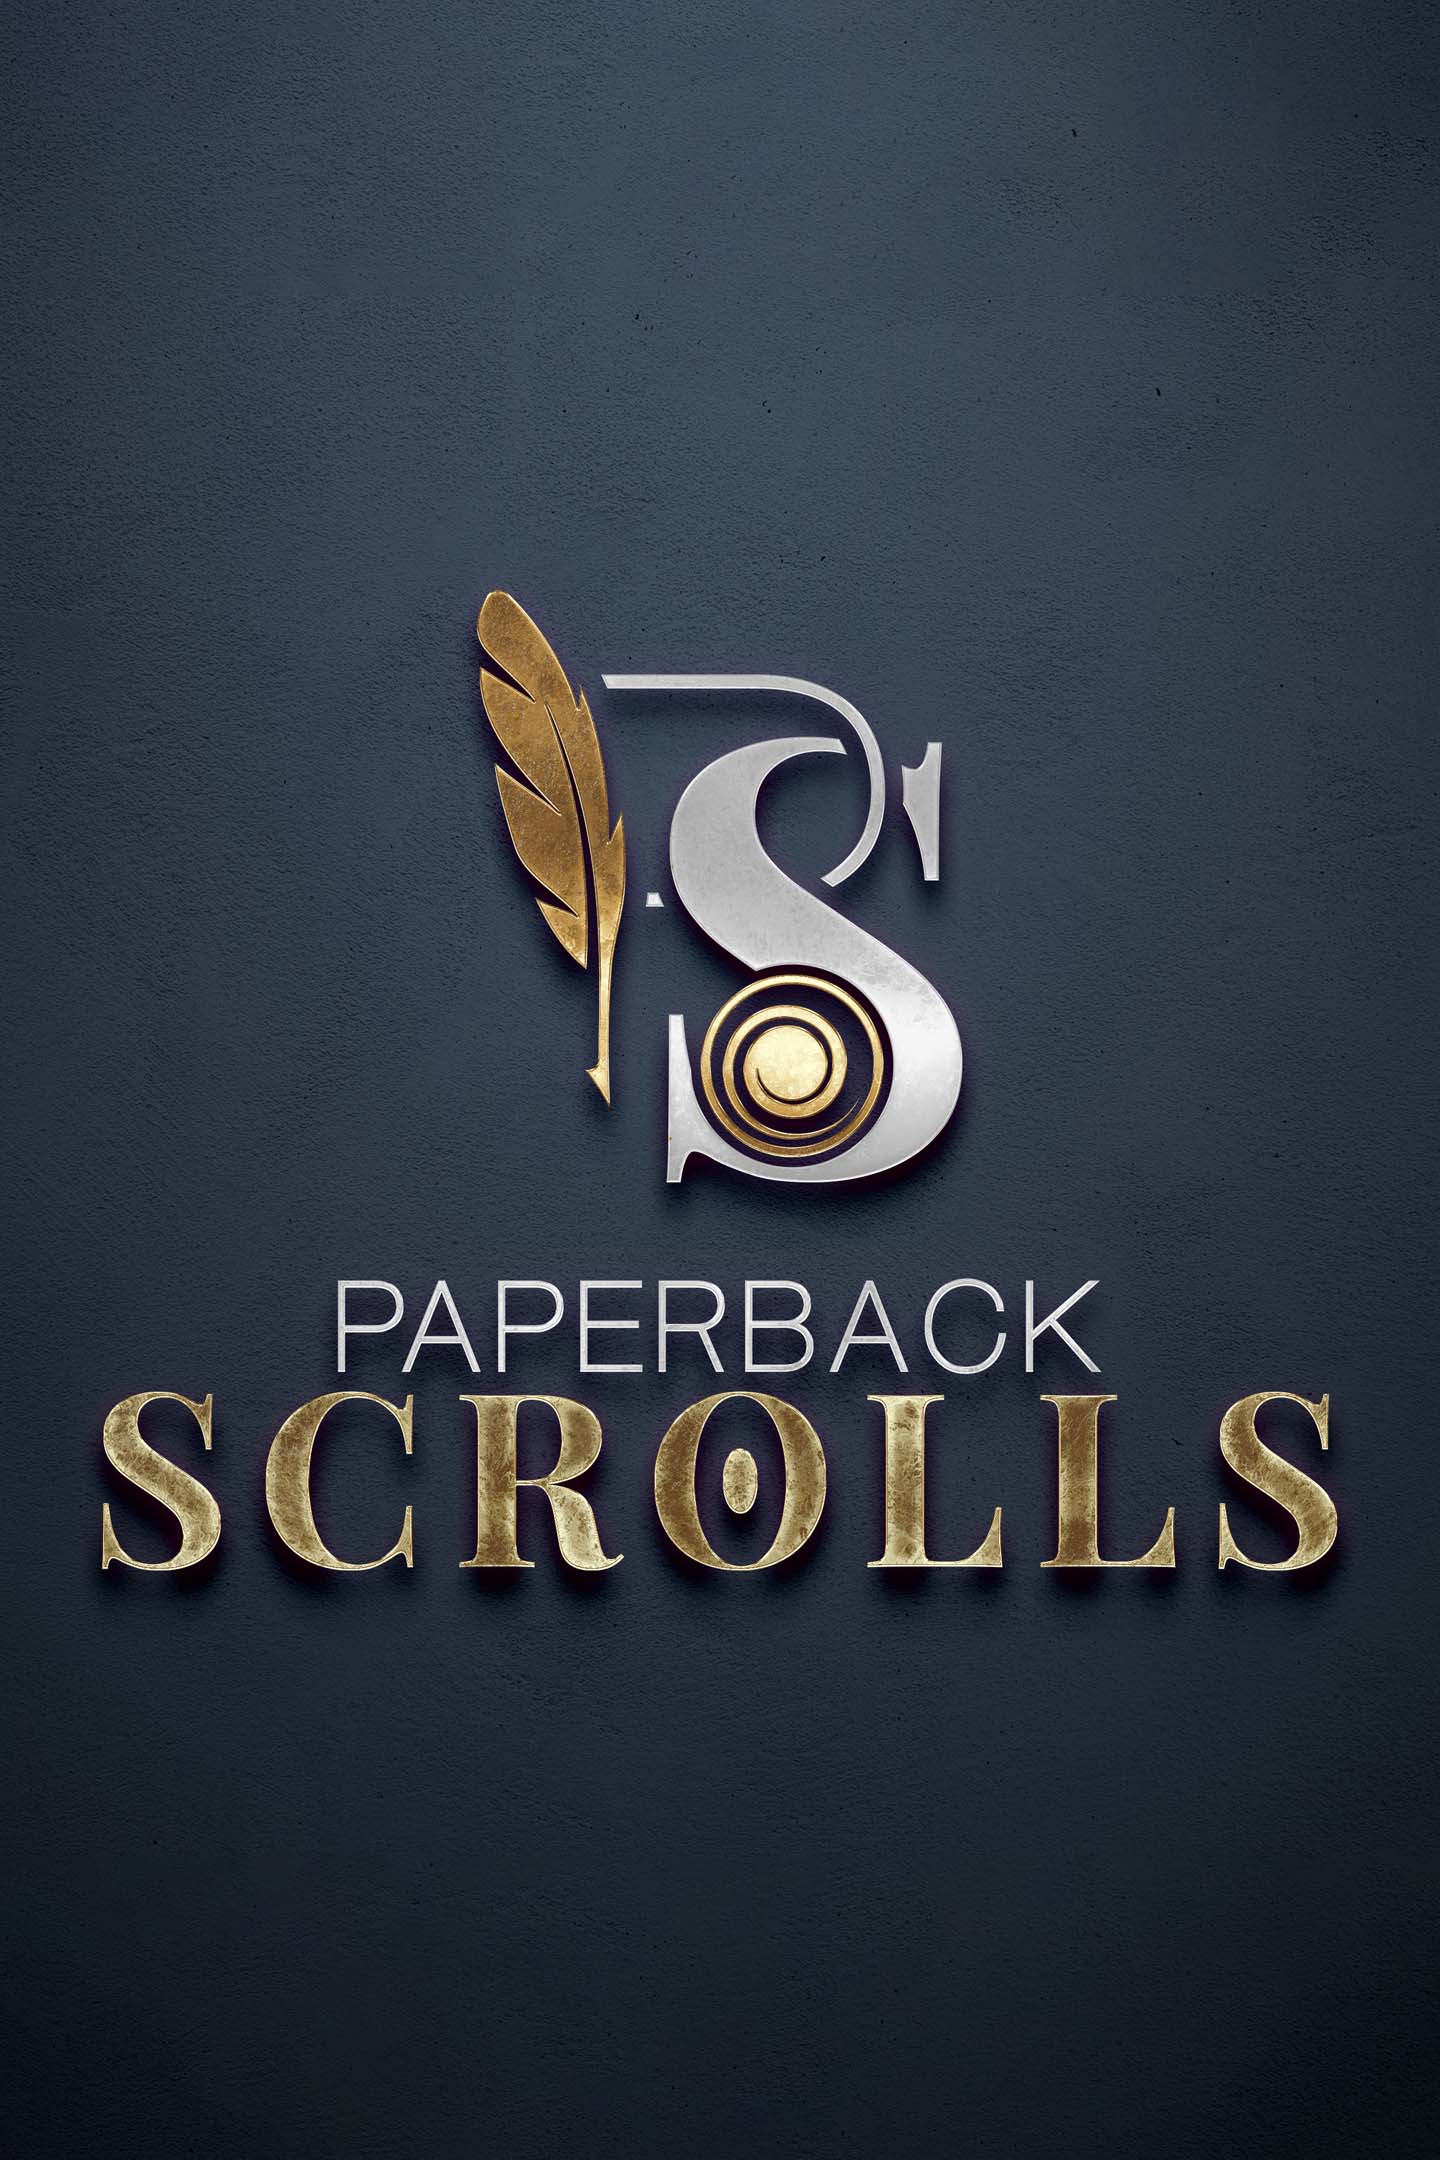 Paperback Scrolls - Logo